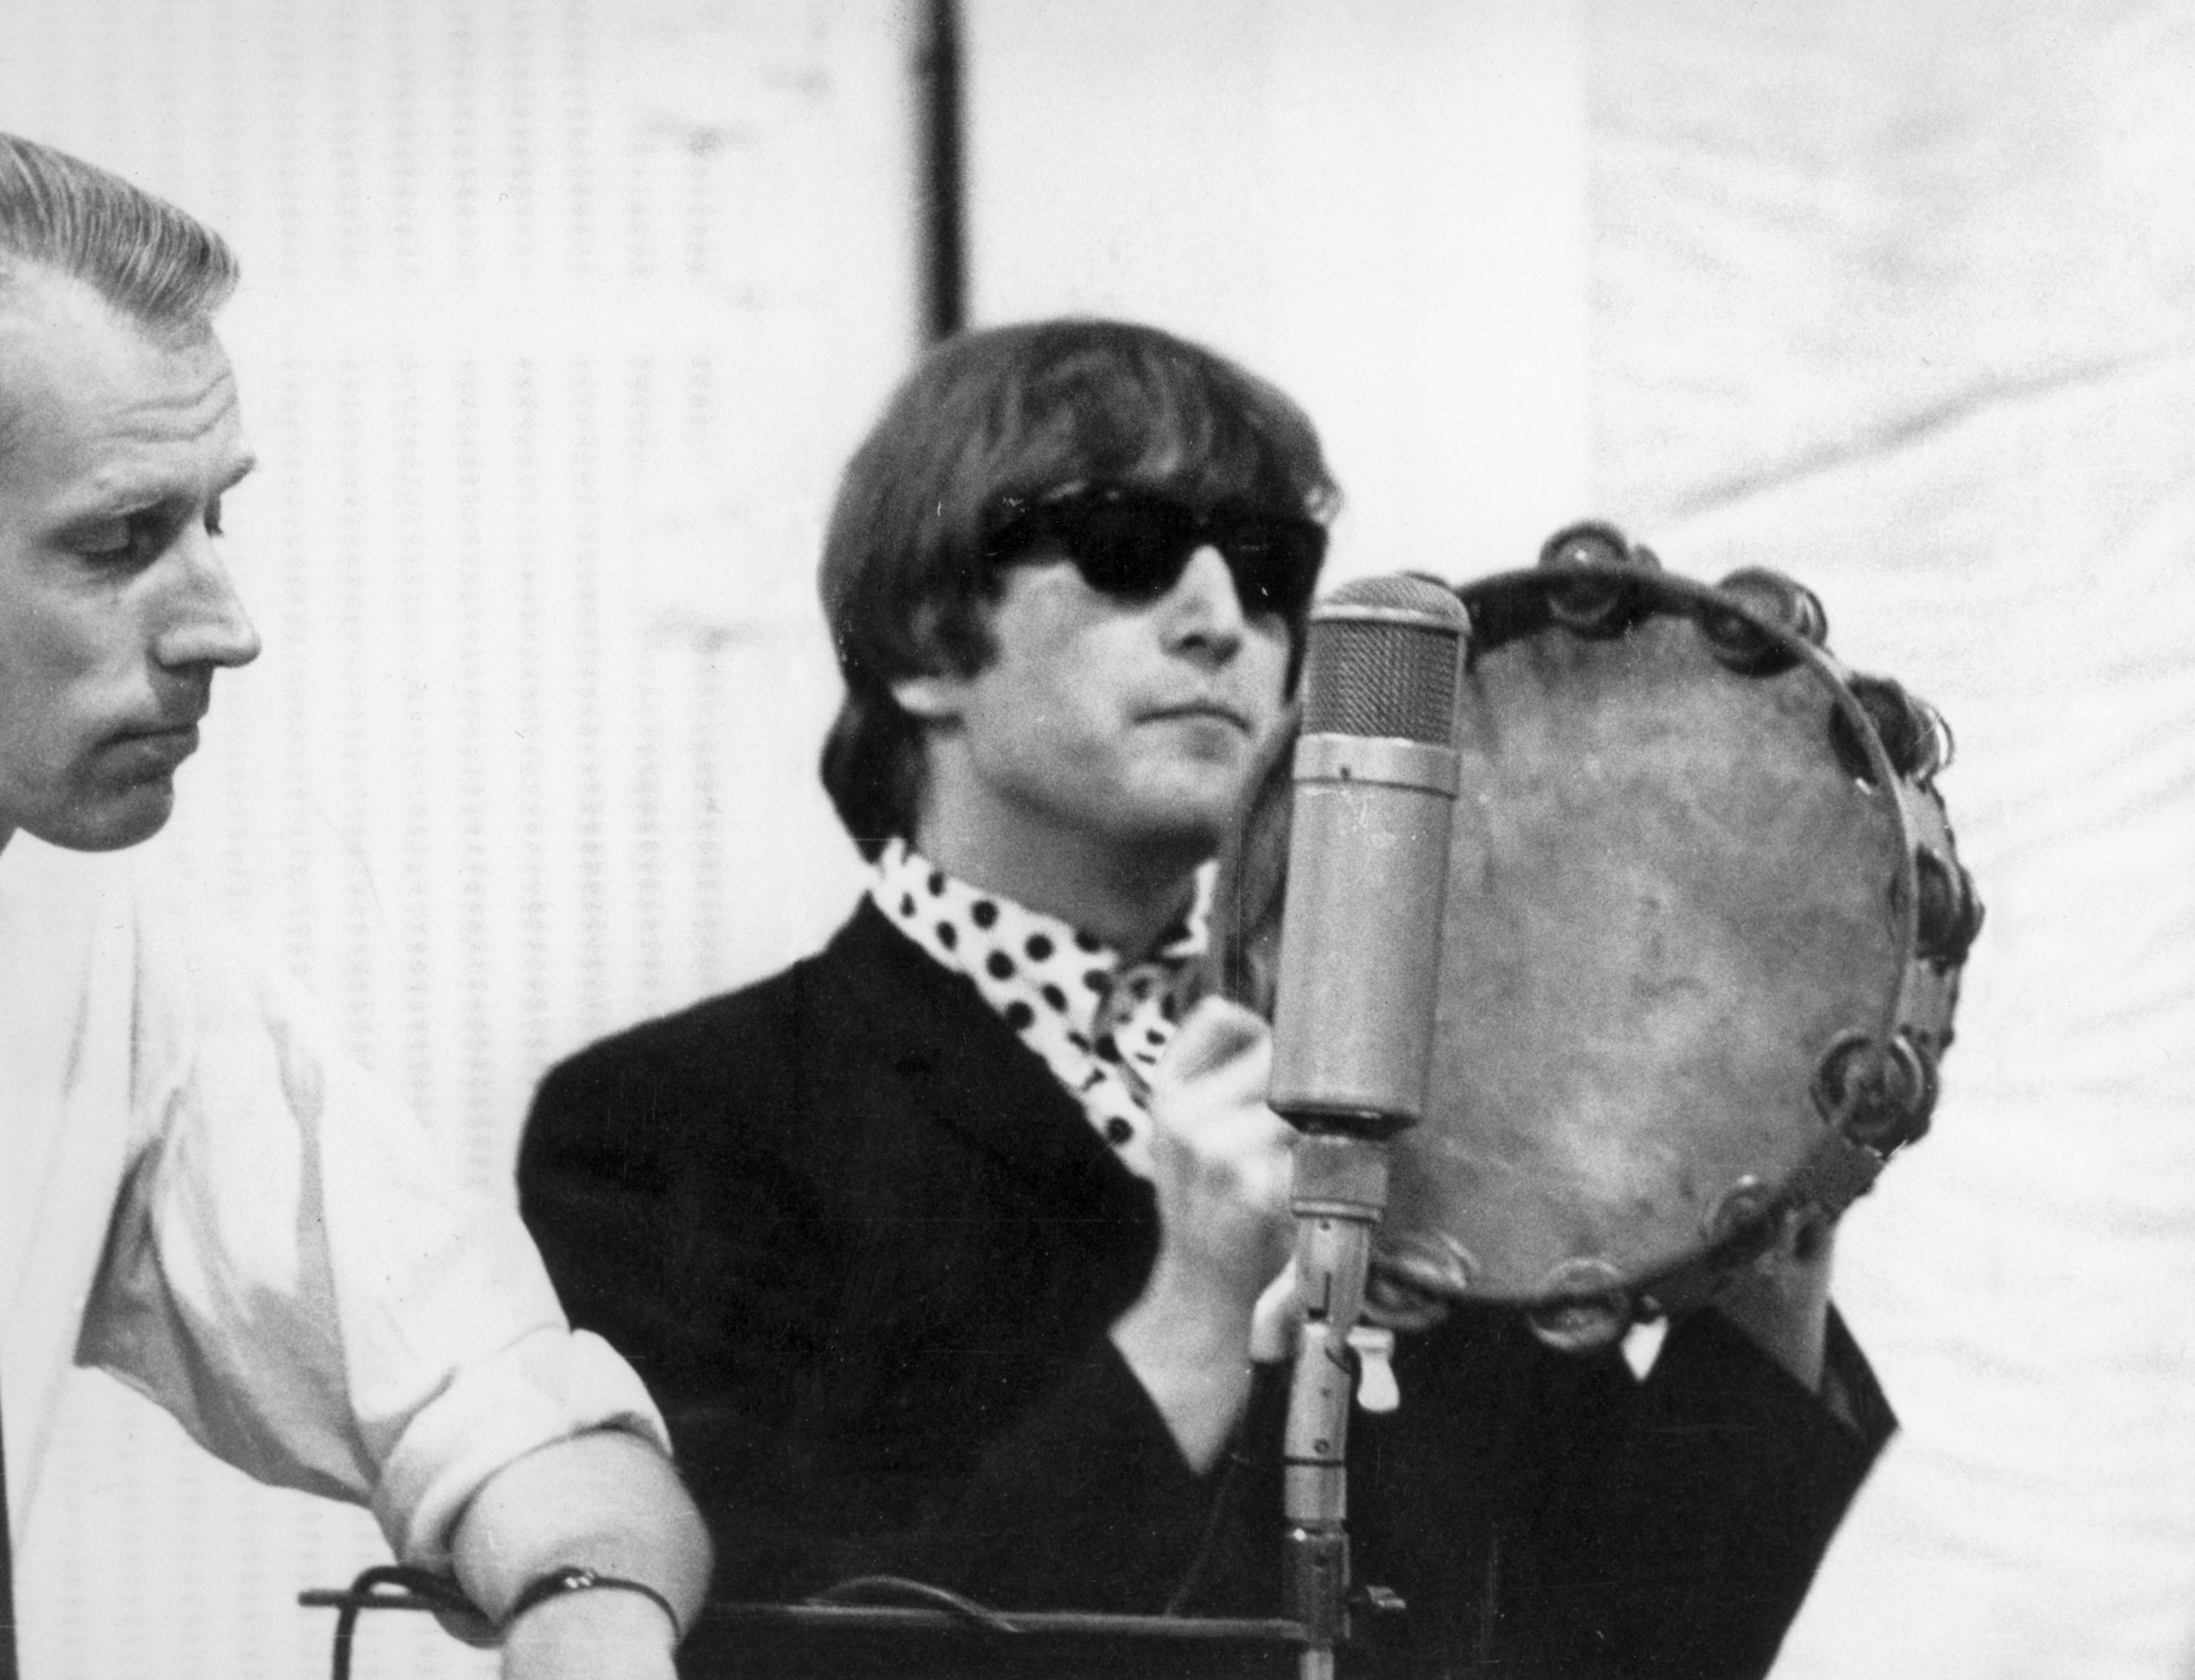 John Lennon on tambourine for the Beatles recording sessions